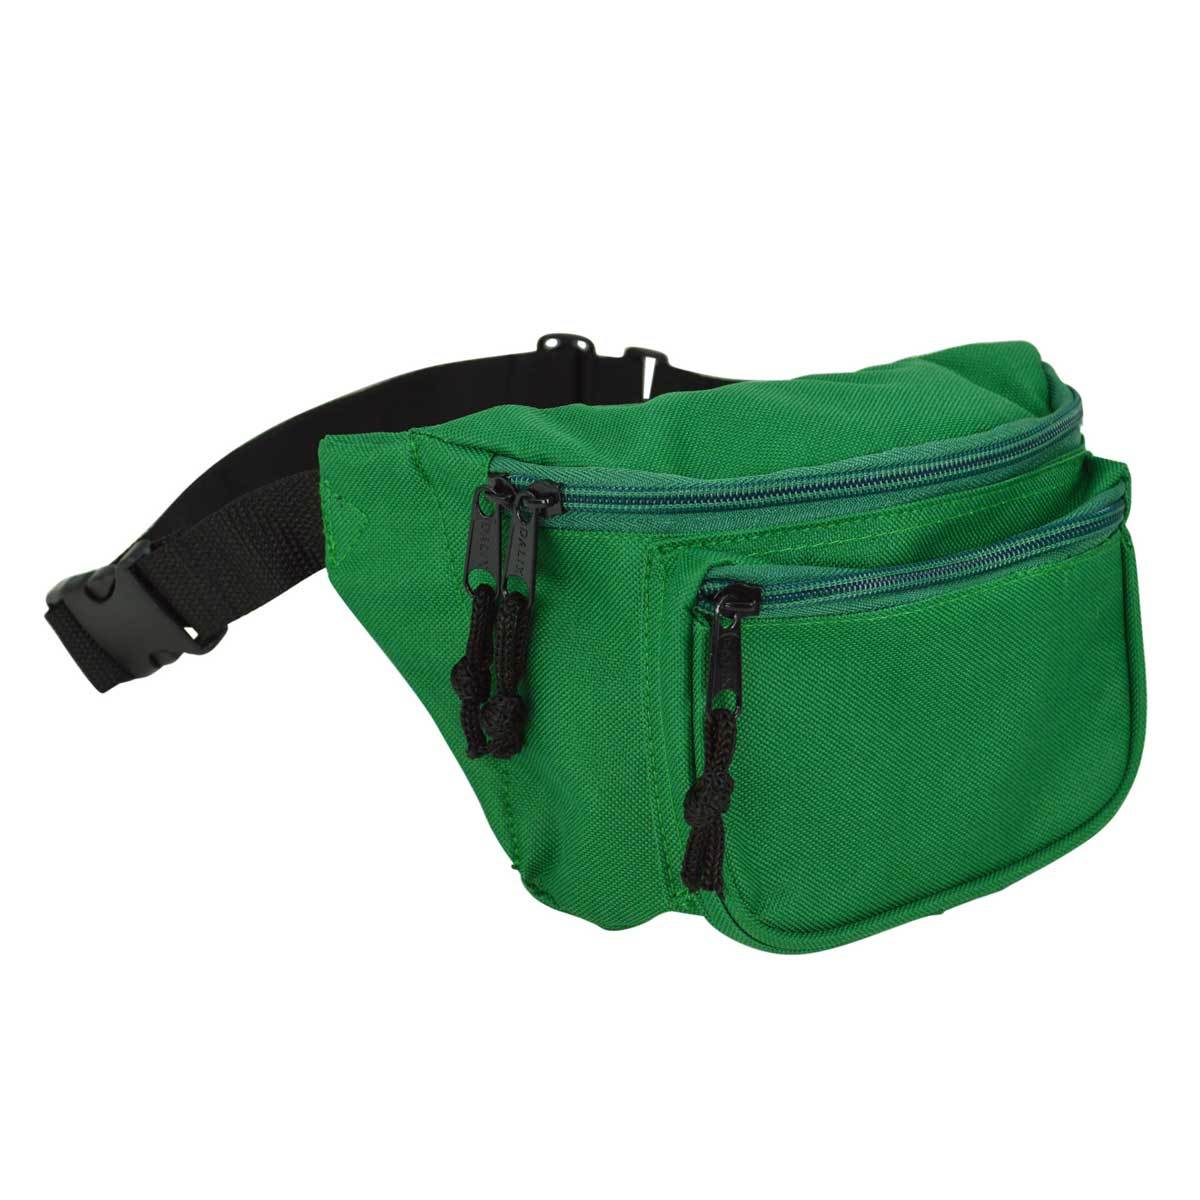 DALIX Fanny Pack 7" Travel Belt Pouch Waist Wallet Bag w/ 3 Pockets FP-002 Fanny Packs DALIX Green 